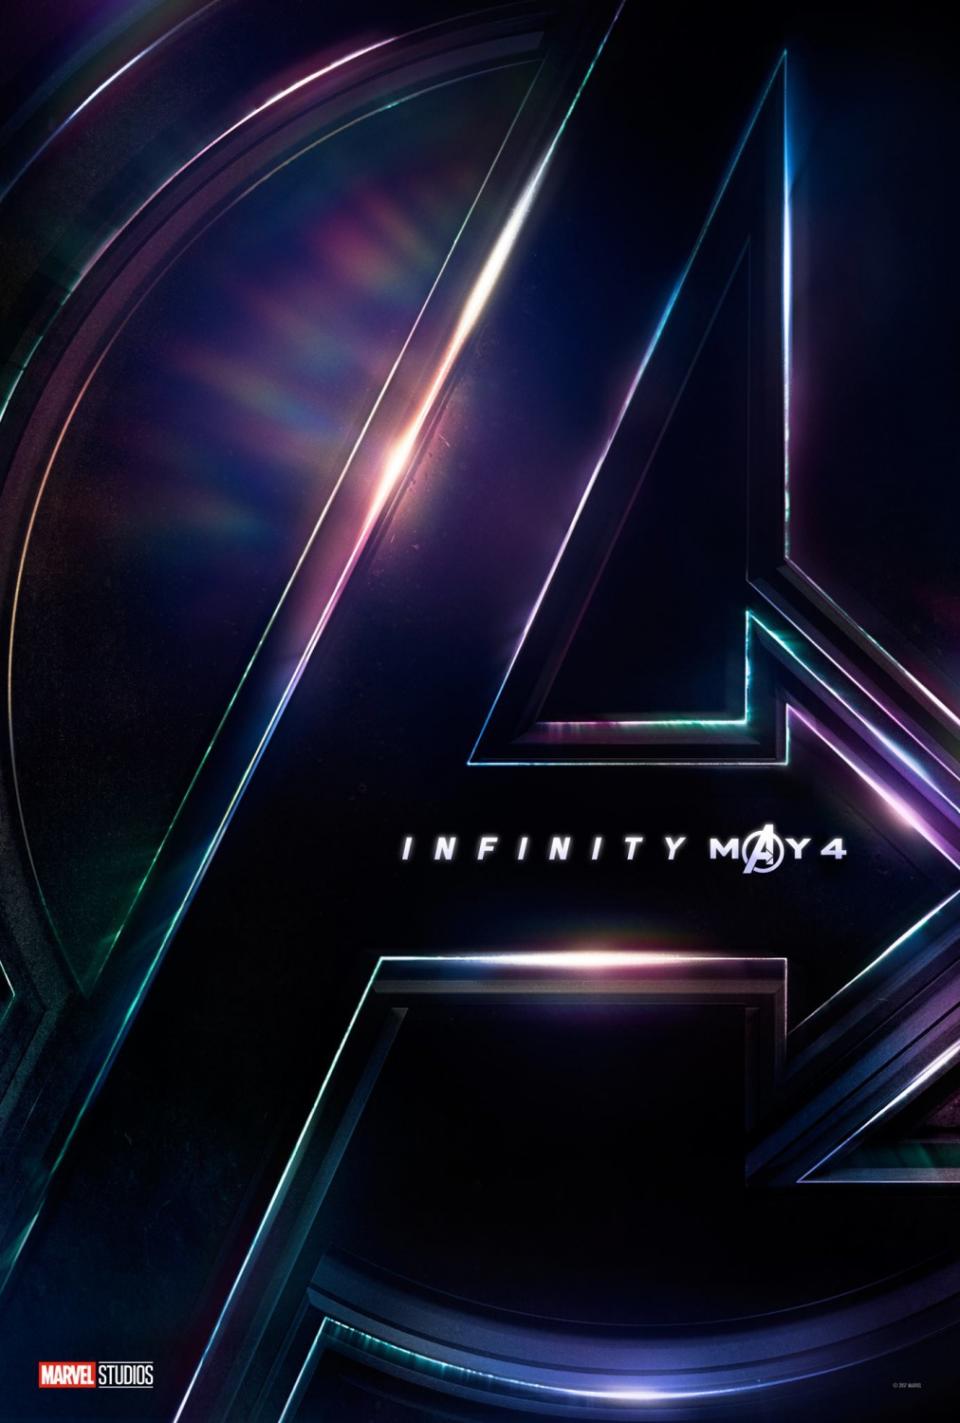 Avengers: Infinity War poster (Disney/Marvel Studios)